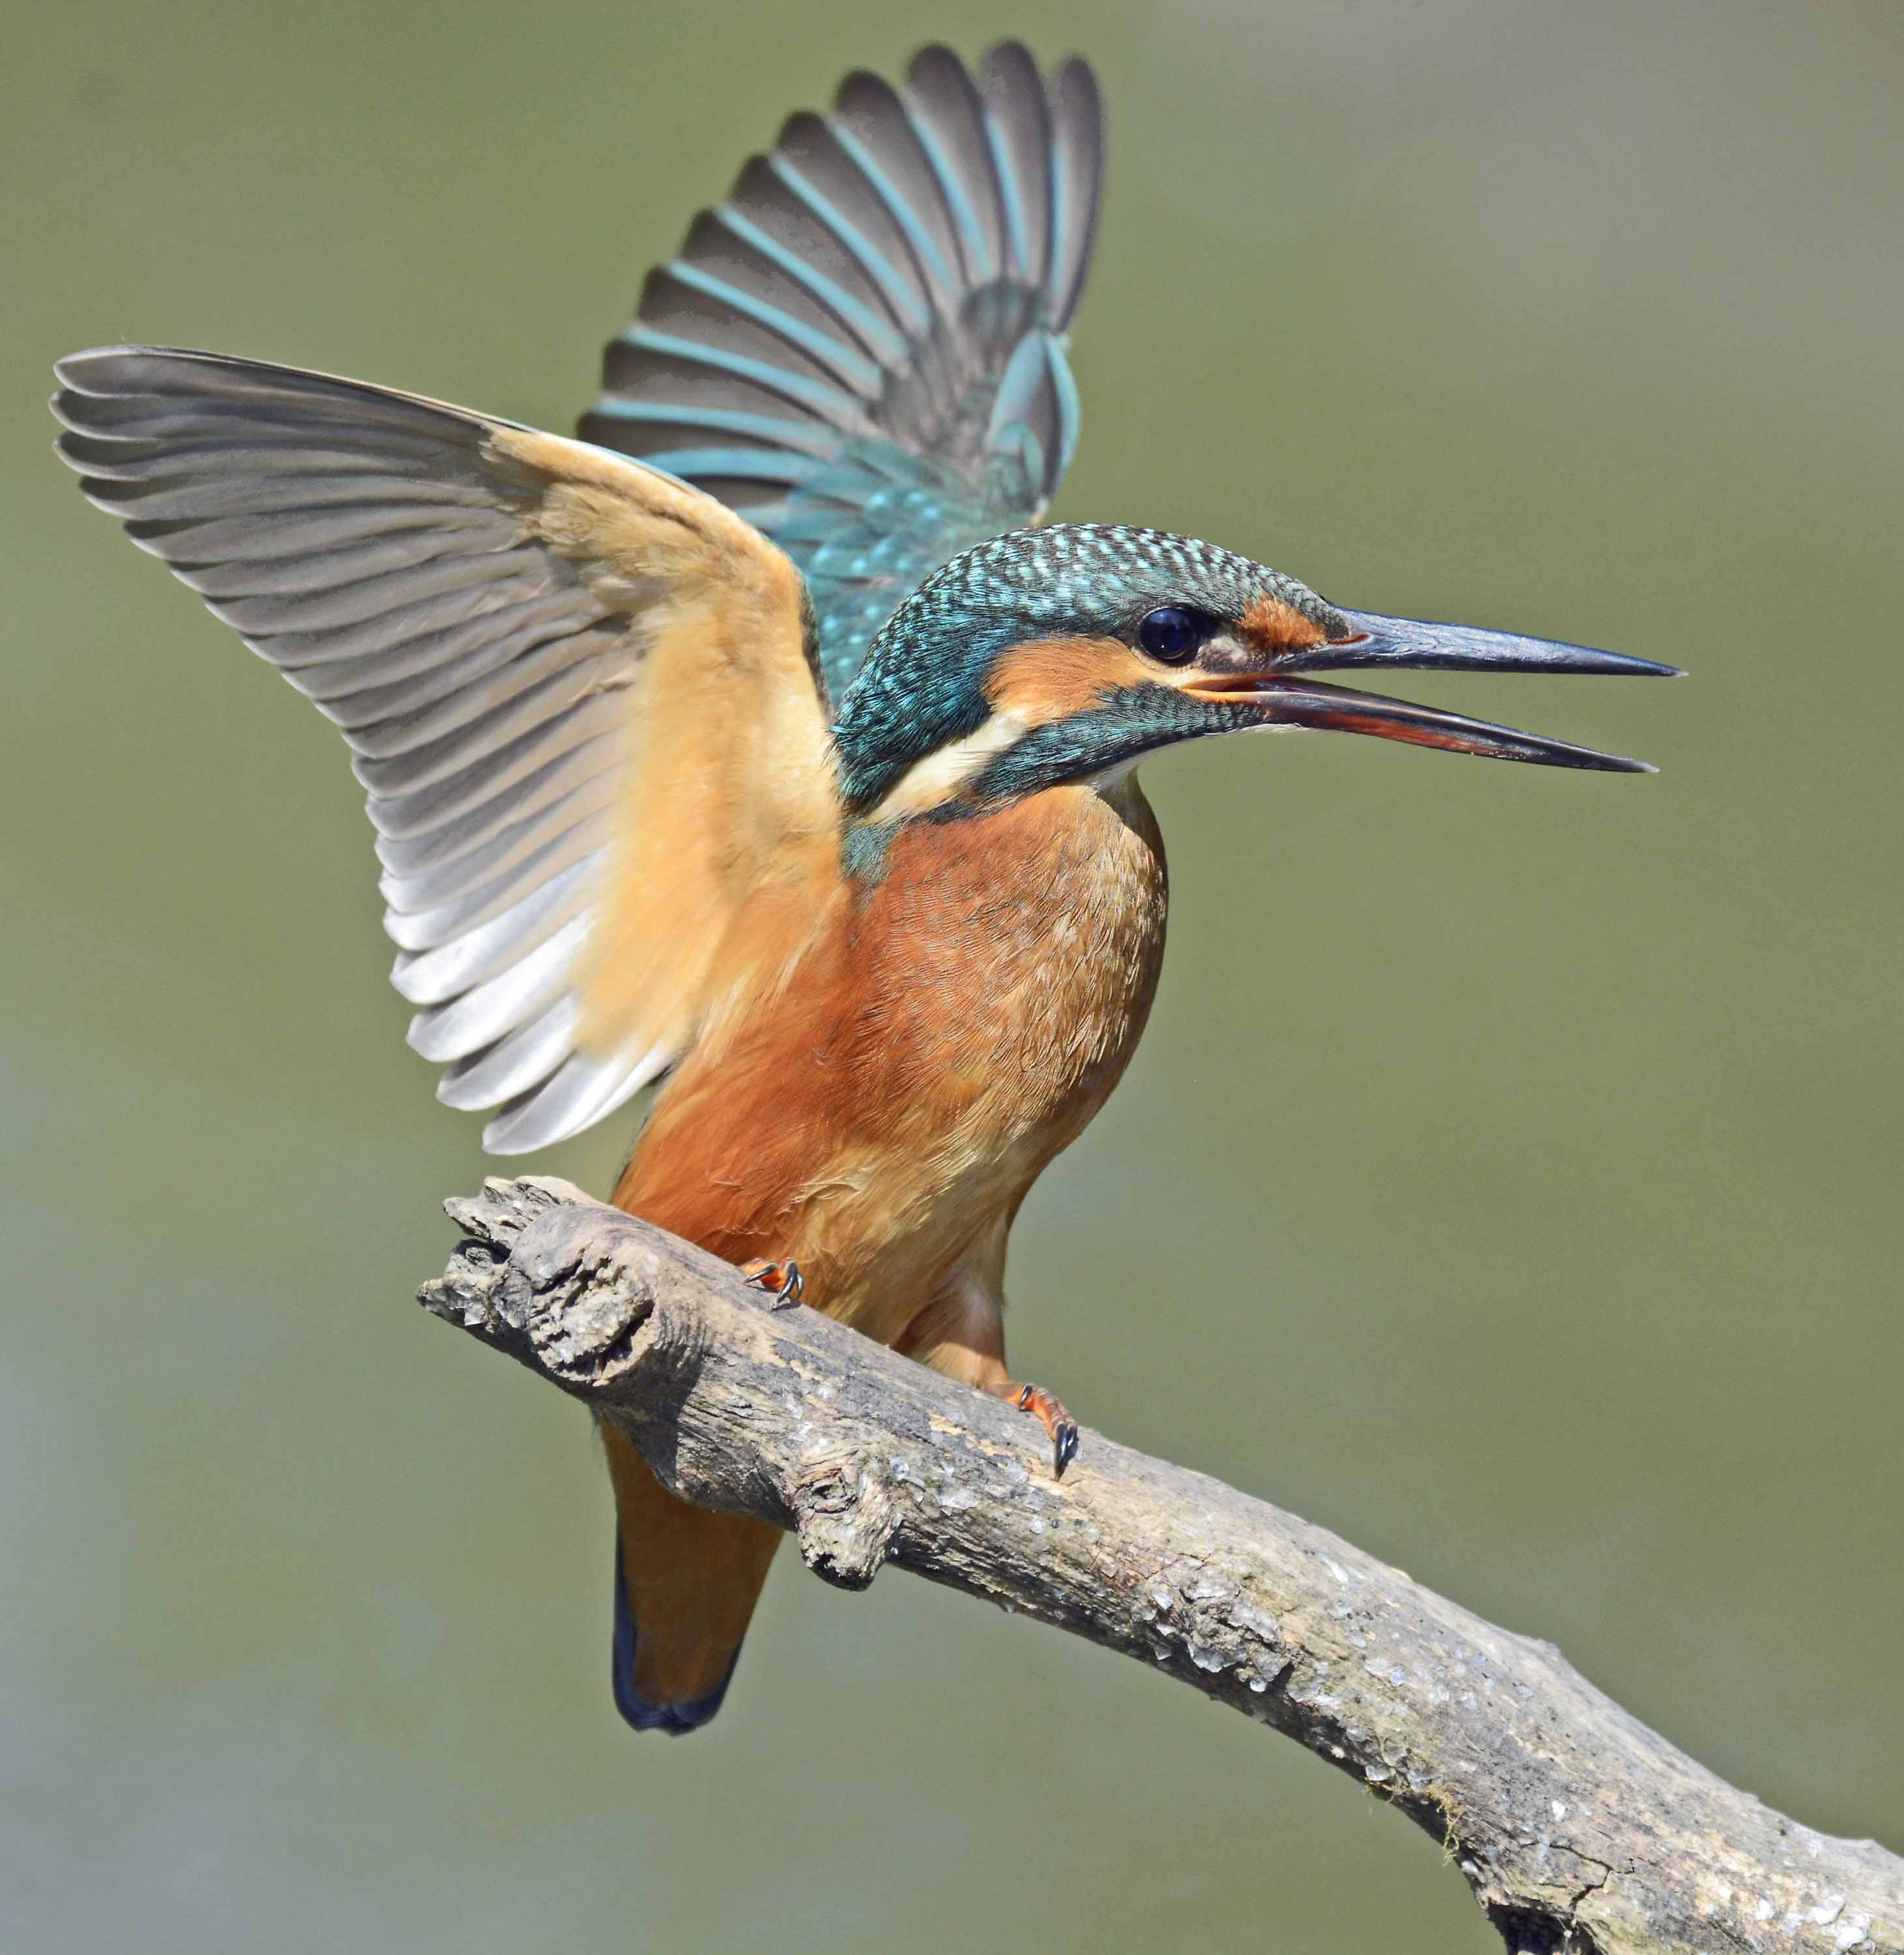 Kingfisher on display...